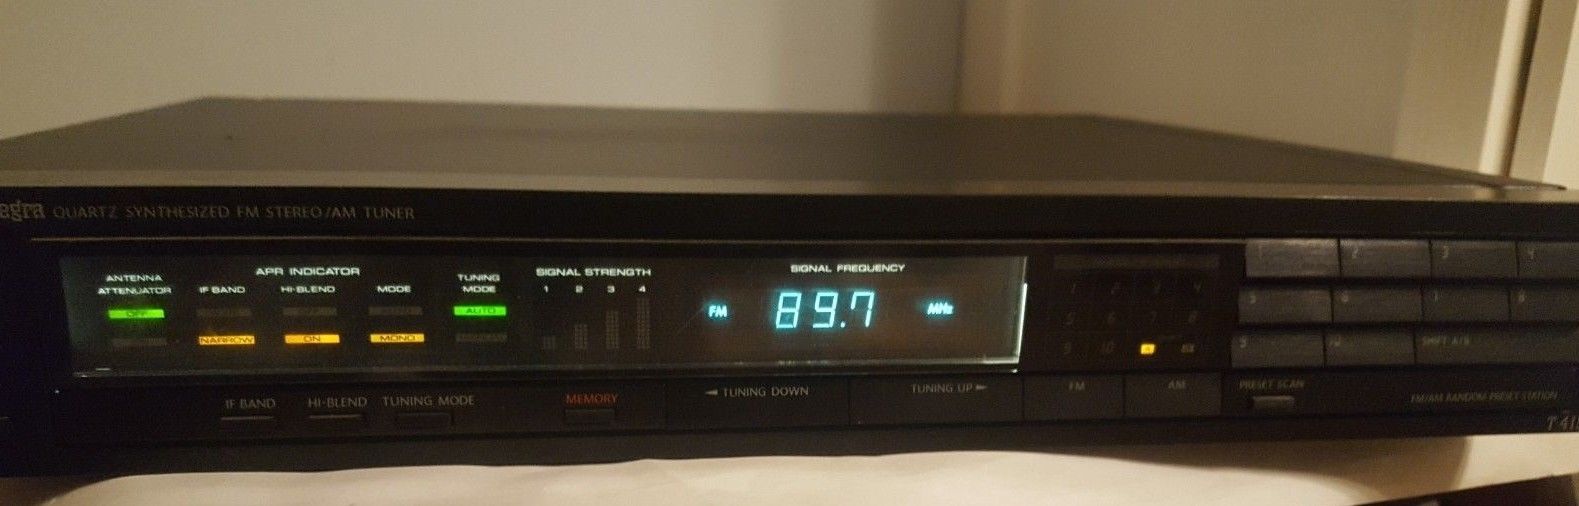 ONKYO FM Stereo T-4150  Integra Quartz Synthesized AM Tuner Digital